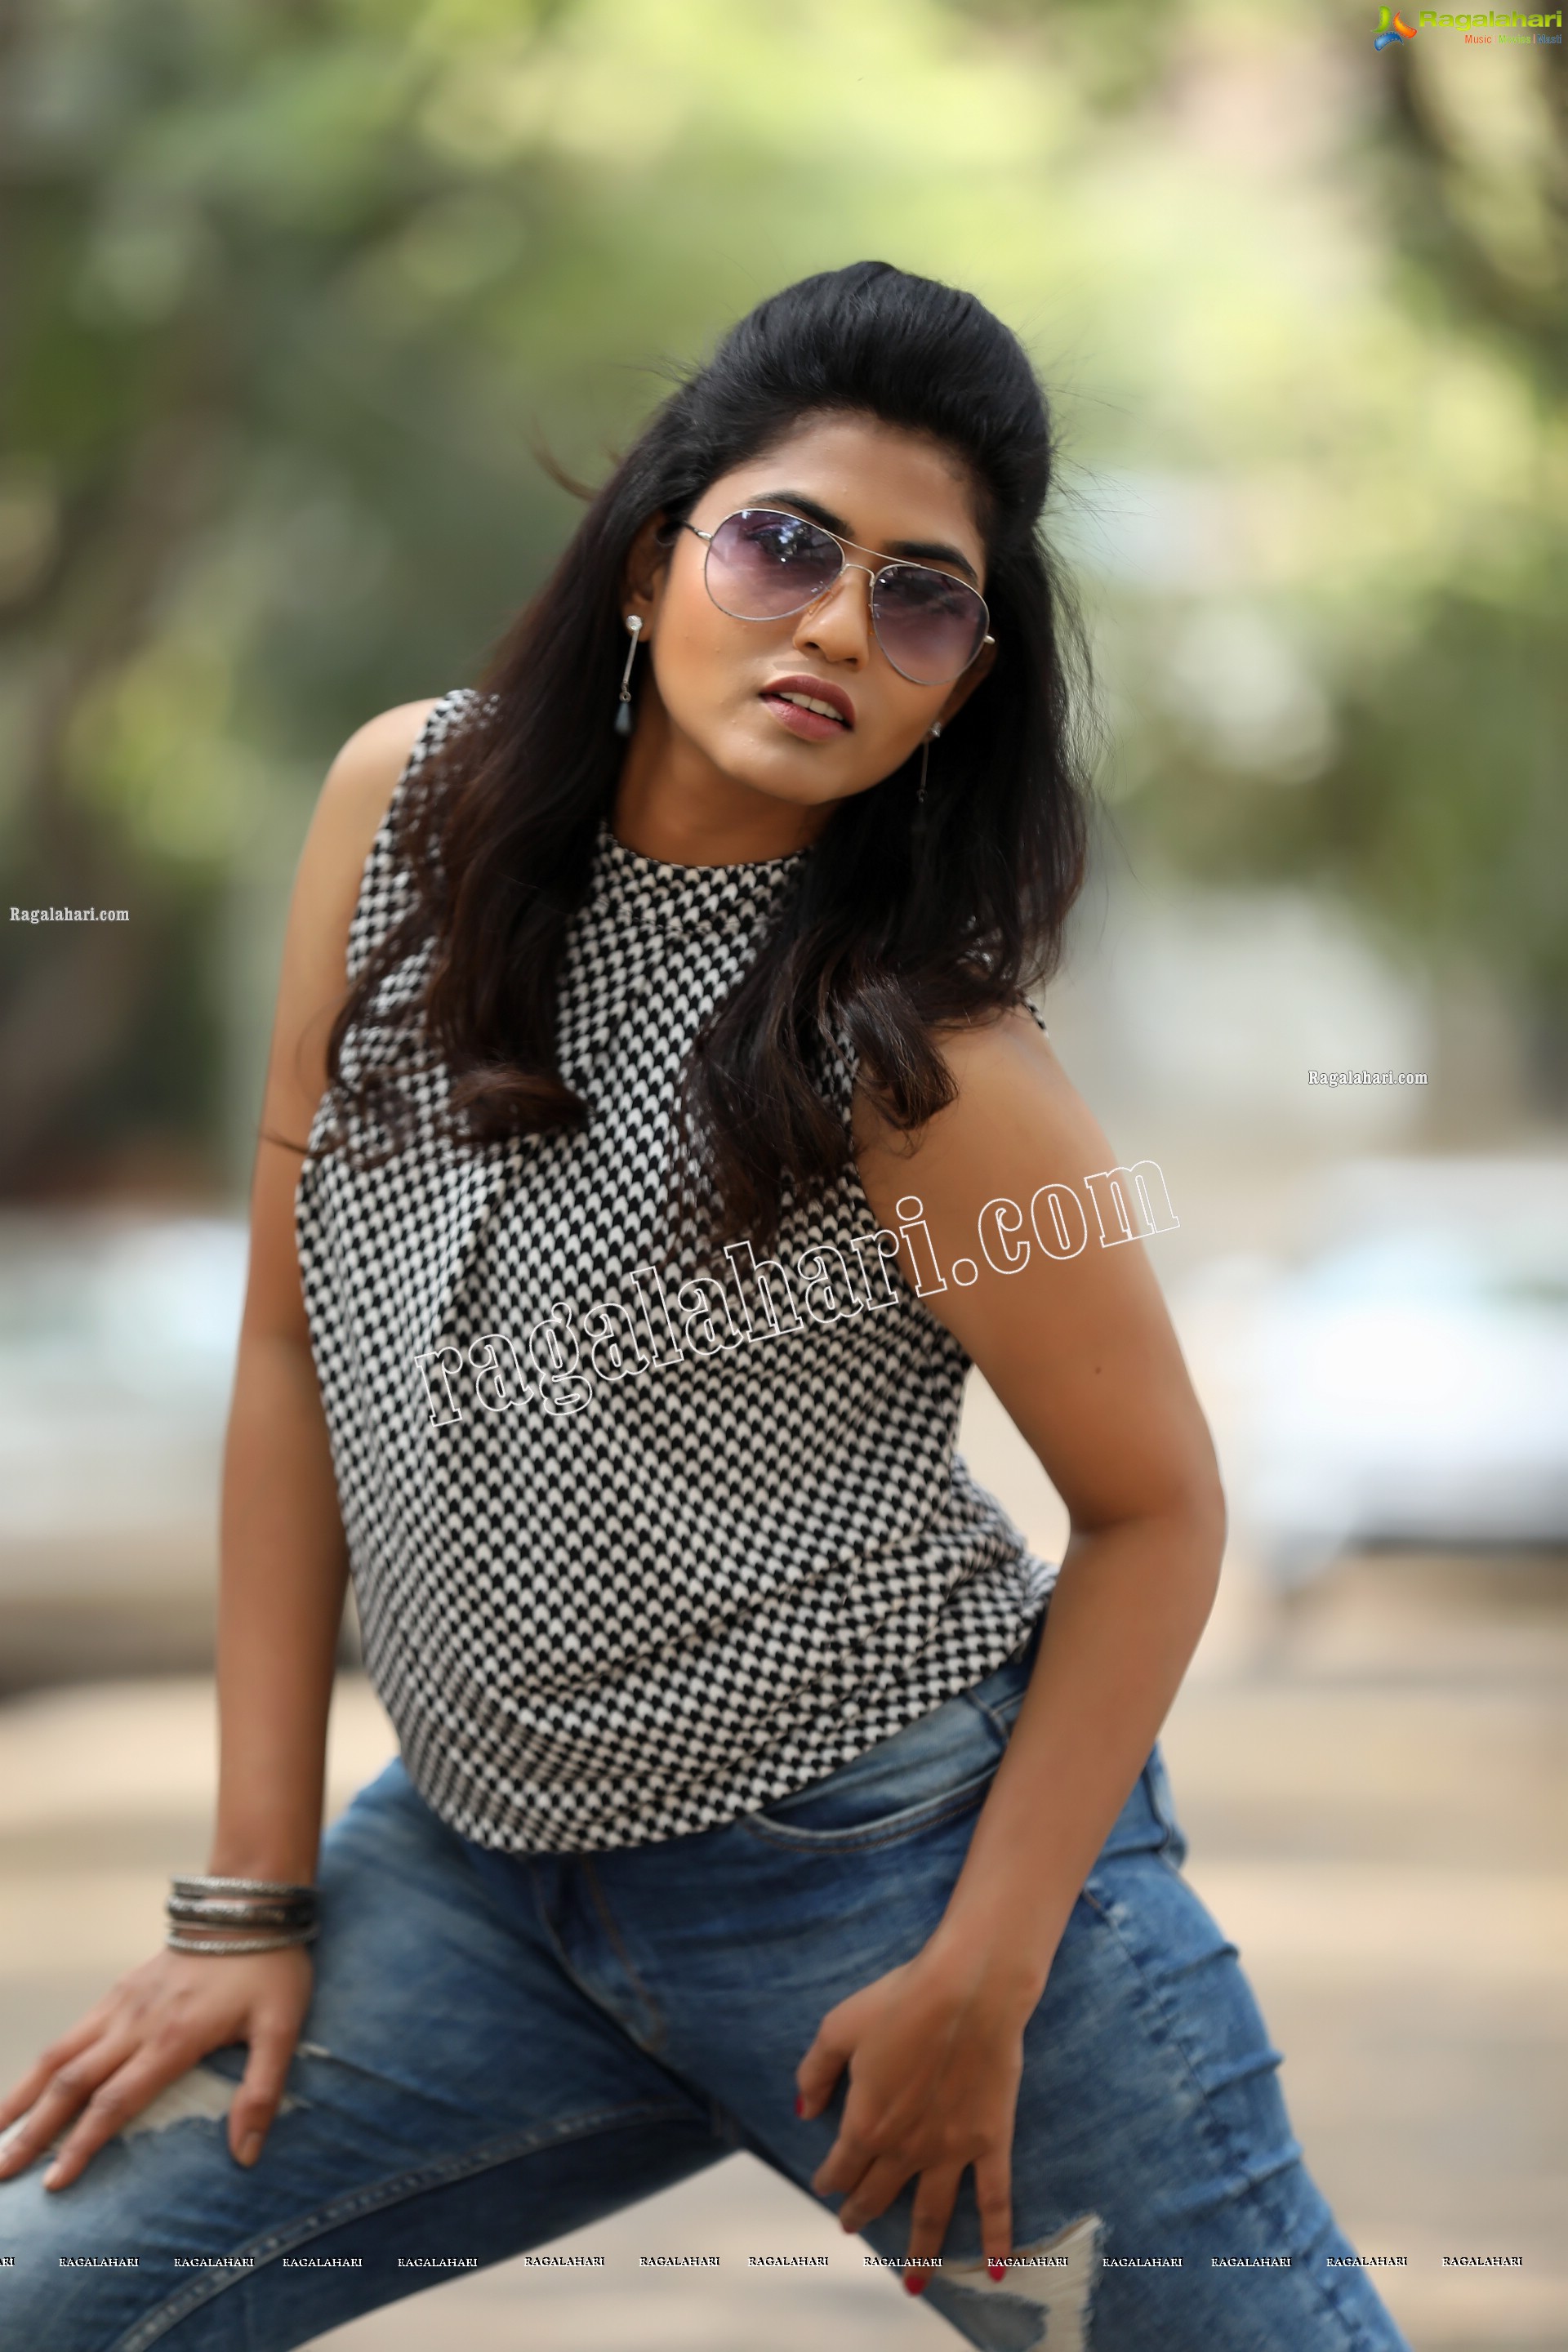 Raja Kumari YN in Halter Neck Geometric-Print Top and Jeans Exclusive Photo Shoot